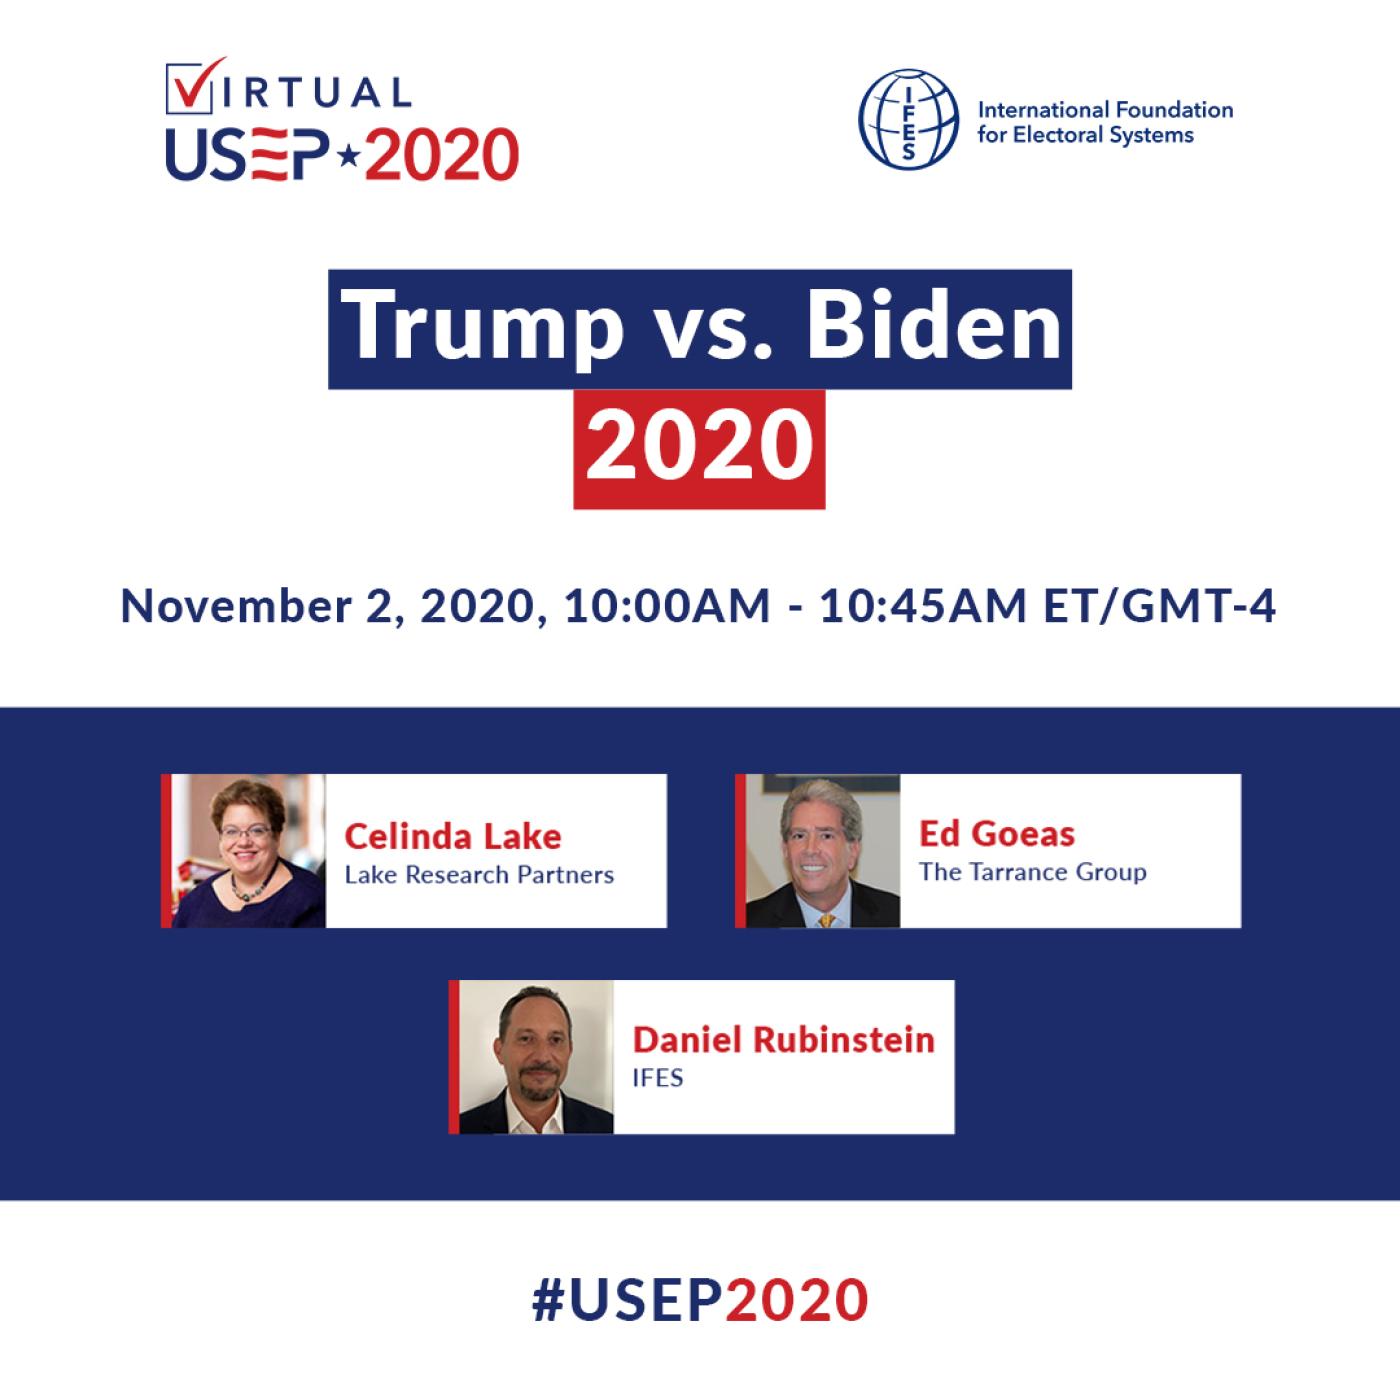 Trump vs. Biden 2020